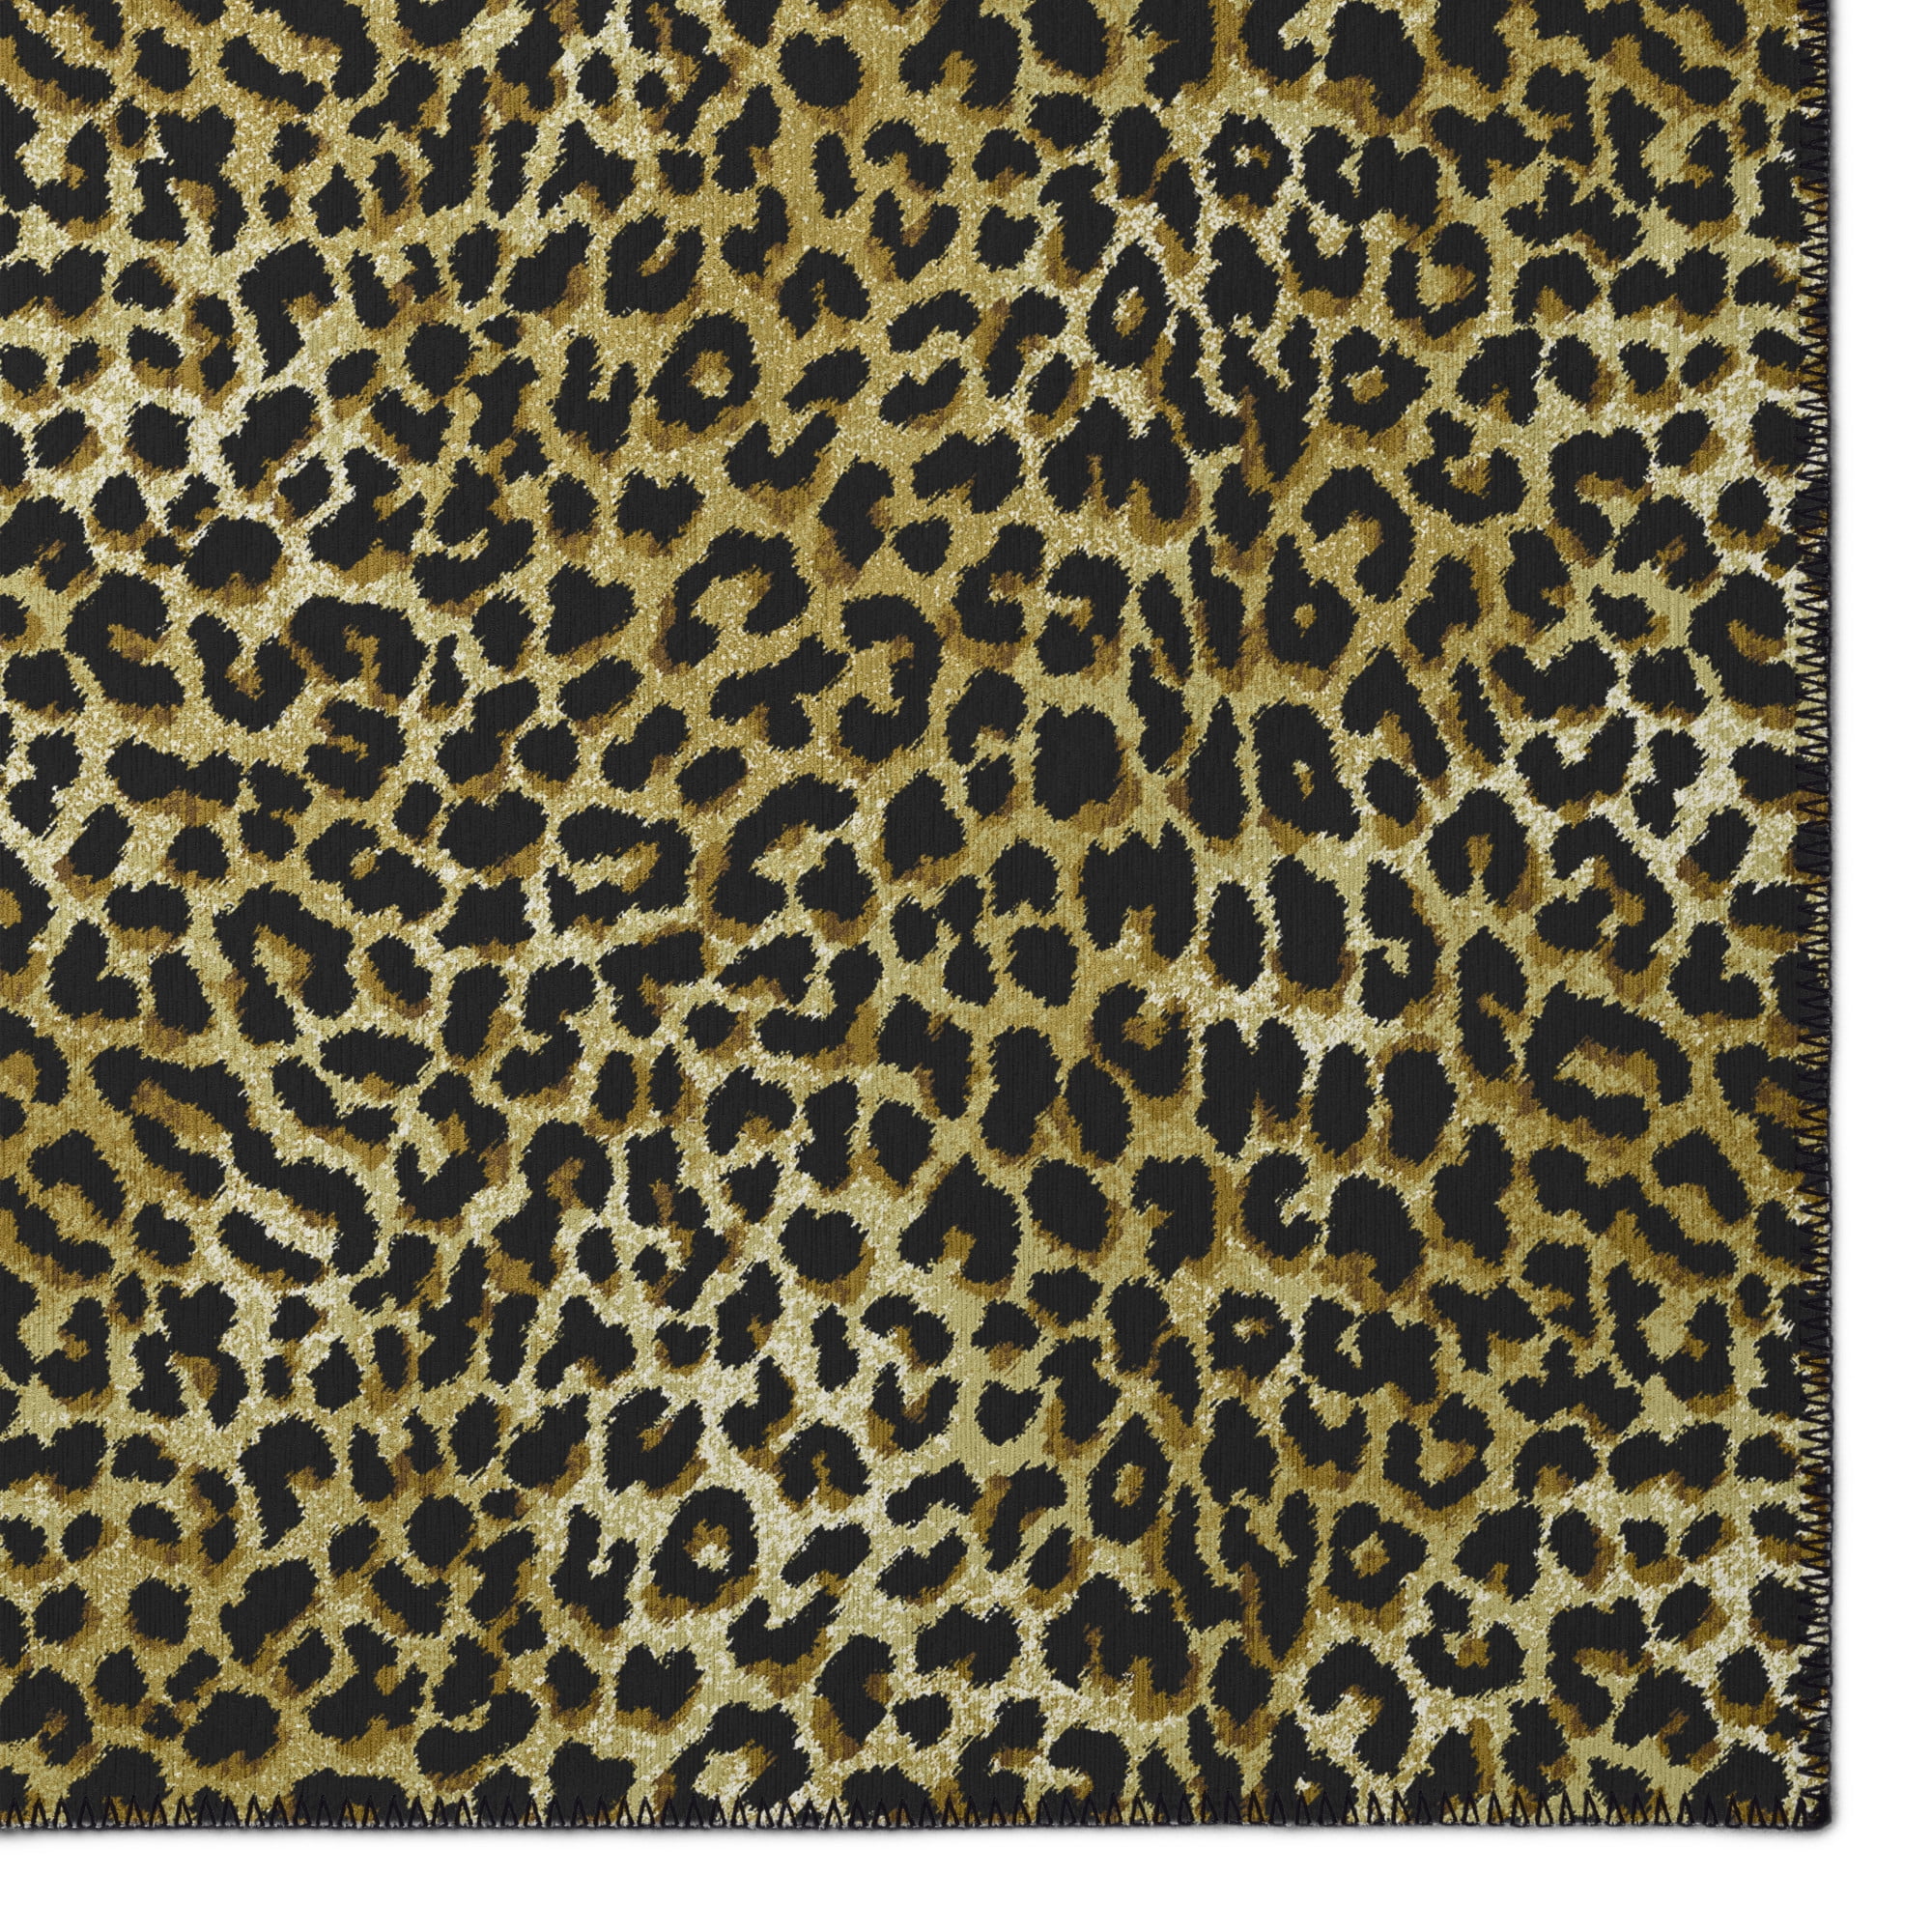 Leopard print animal print carpet - TenStickers